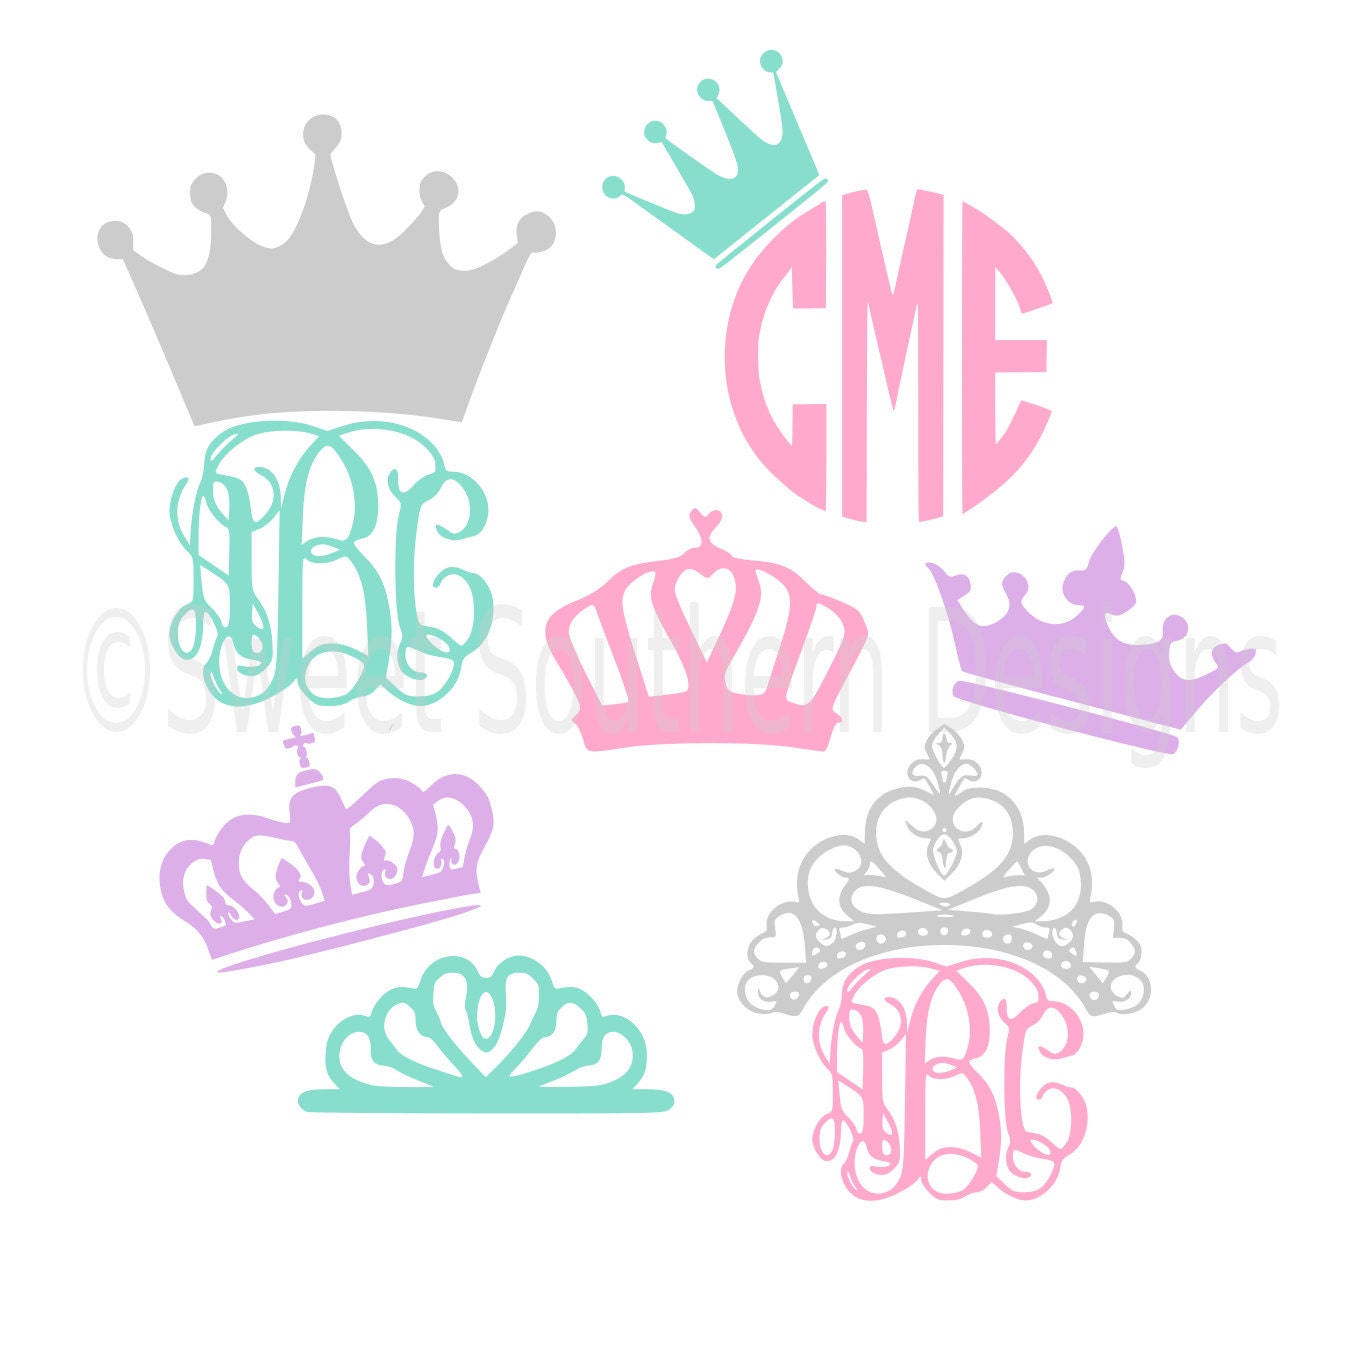 Free Free Princess Crown Monogram Svg 506 SVG PNG EPS DXF File